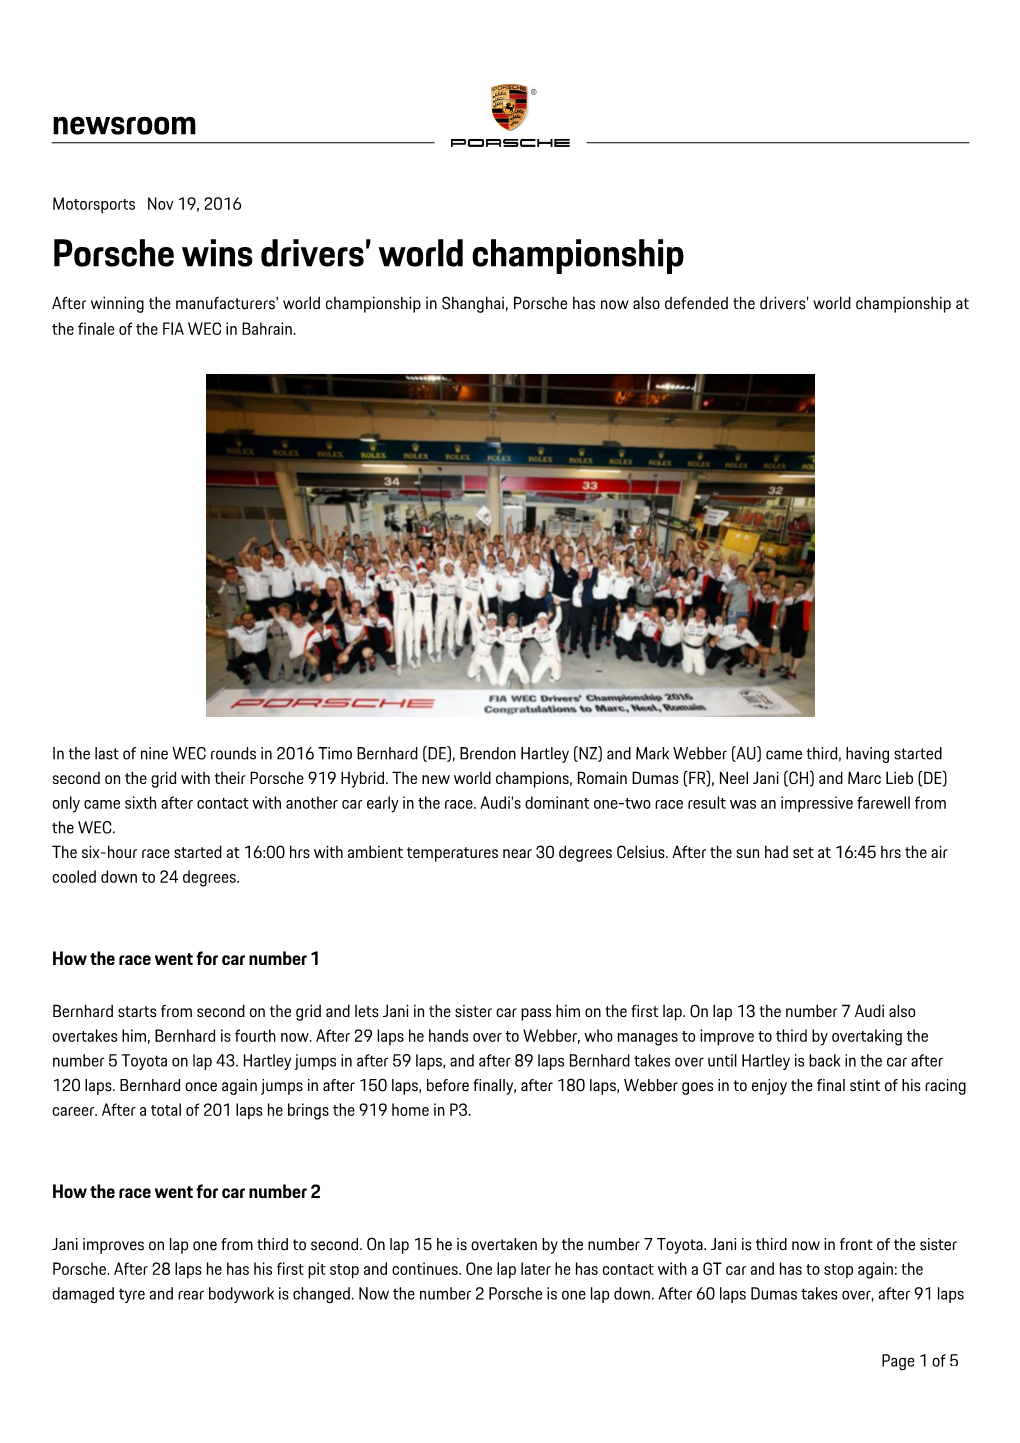 Porsche Wins Drivers' World Championship